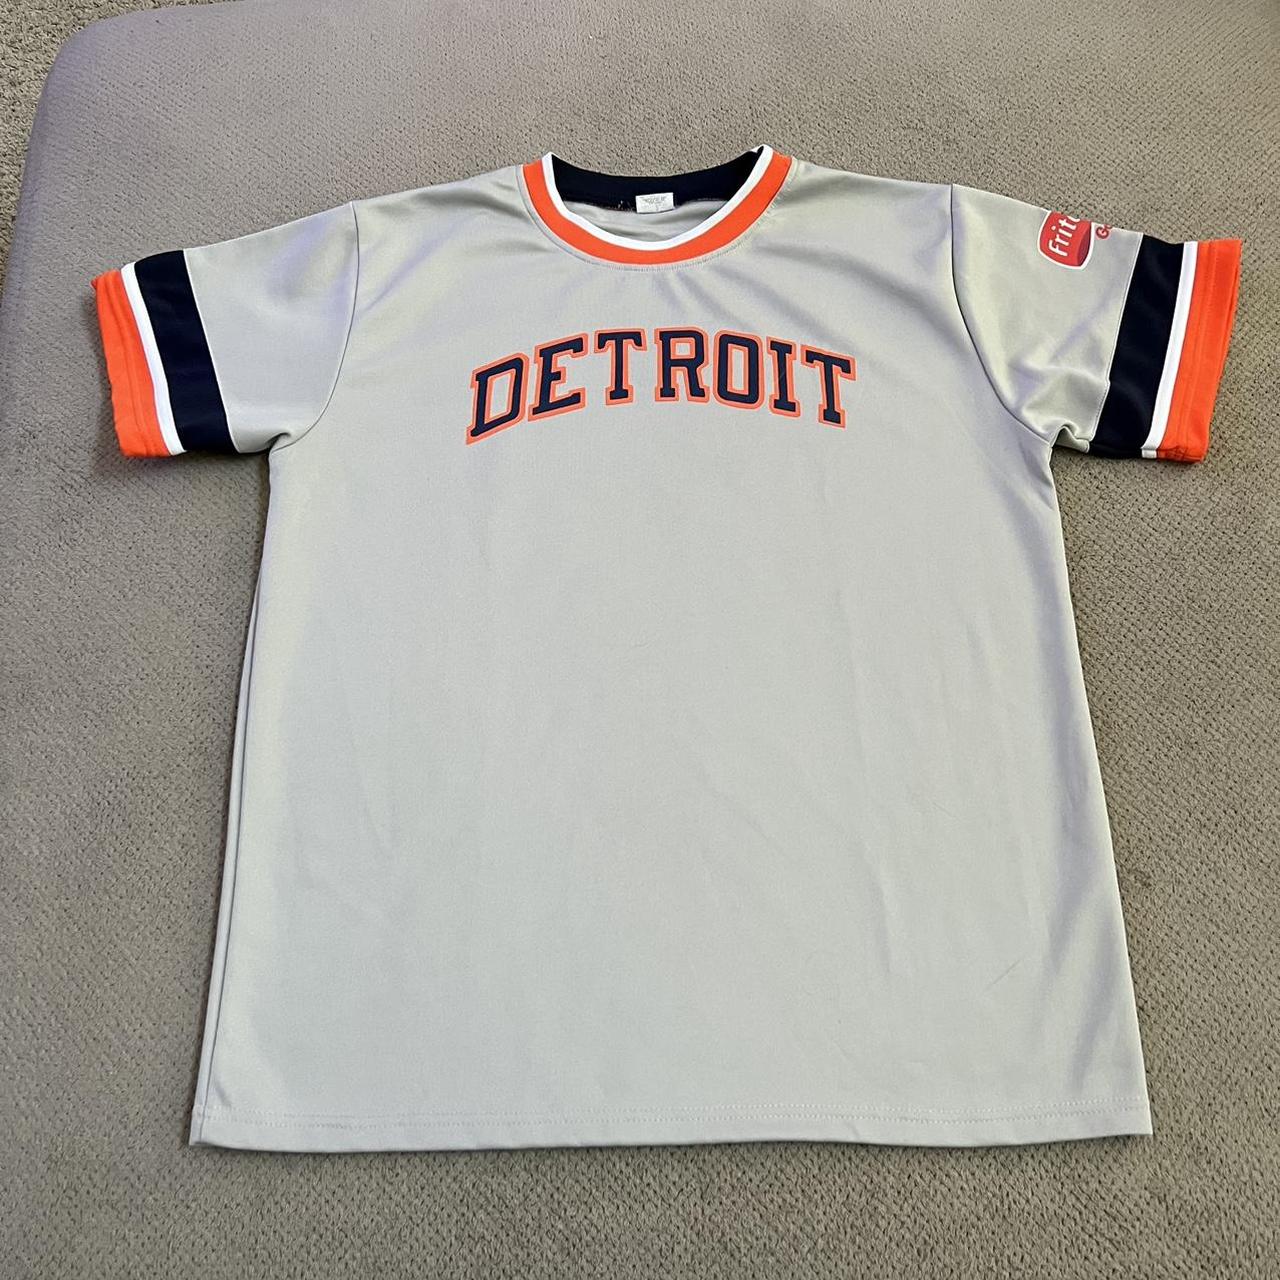 1984 tigers jersey